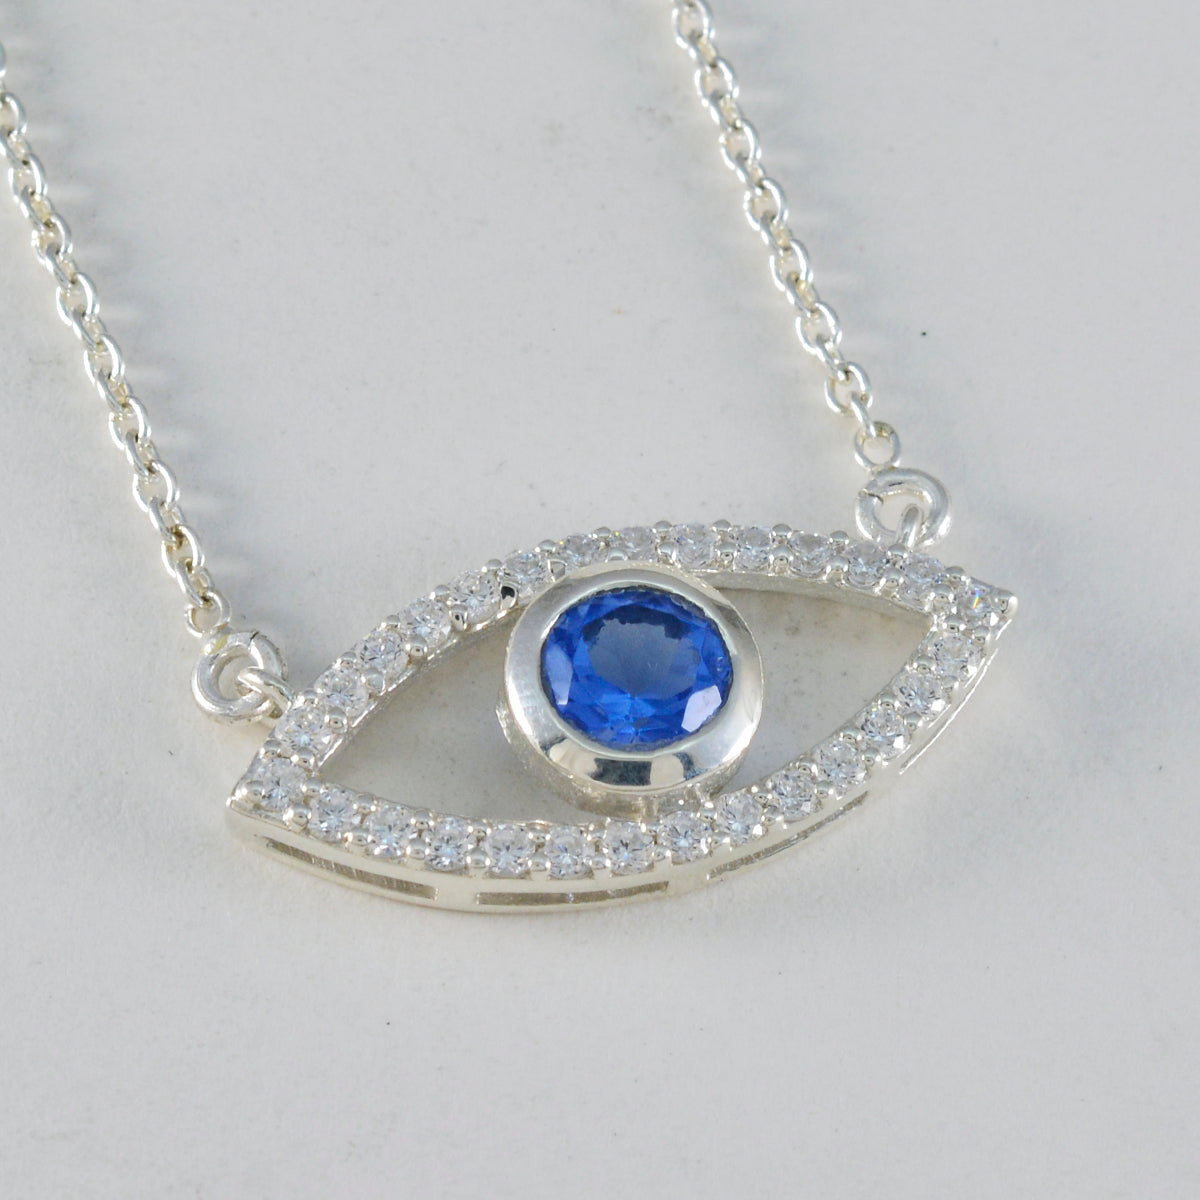 Riyo preciosa piedra preciosa redonda facetada azul zafiro azul cz 1145 colgante de plata esterlina regalo para cumpleaños